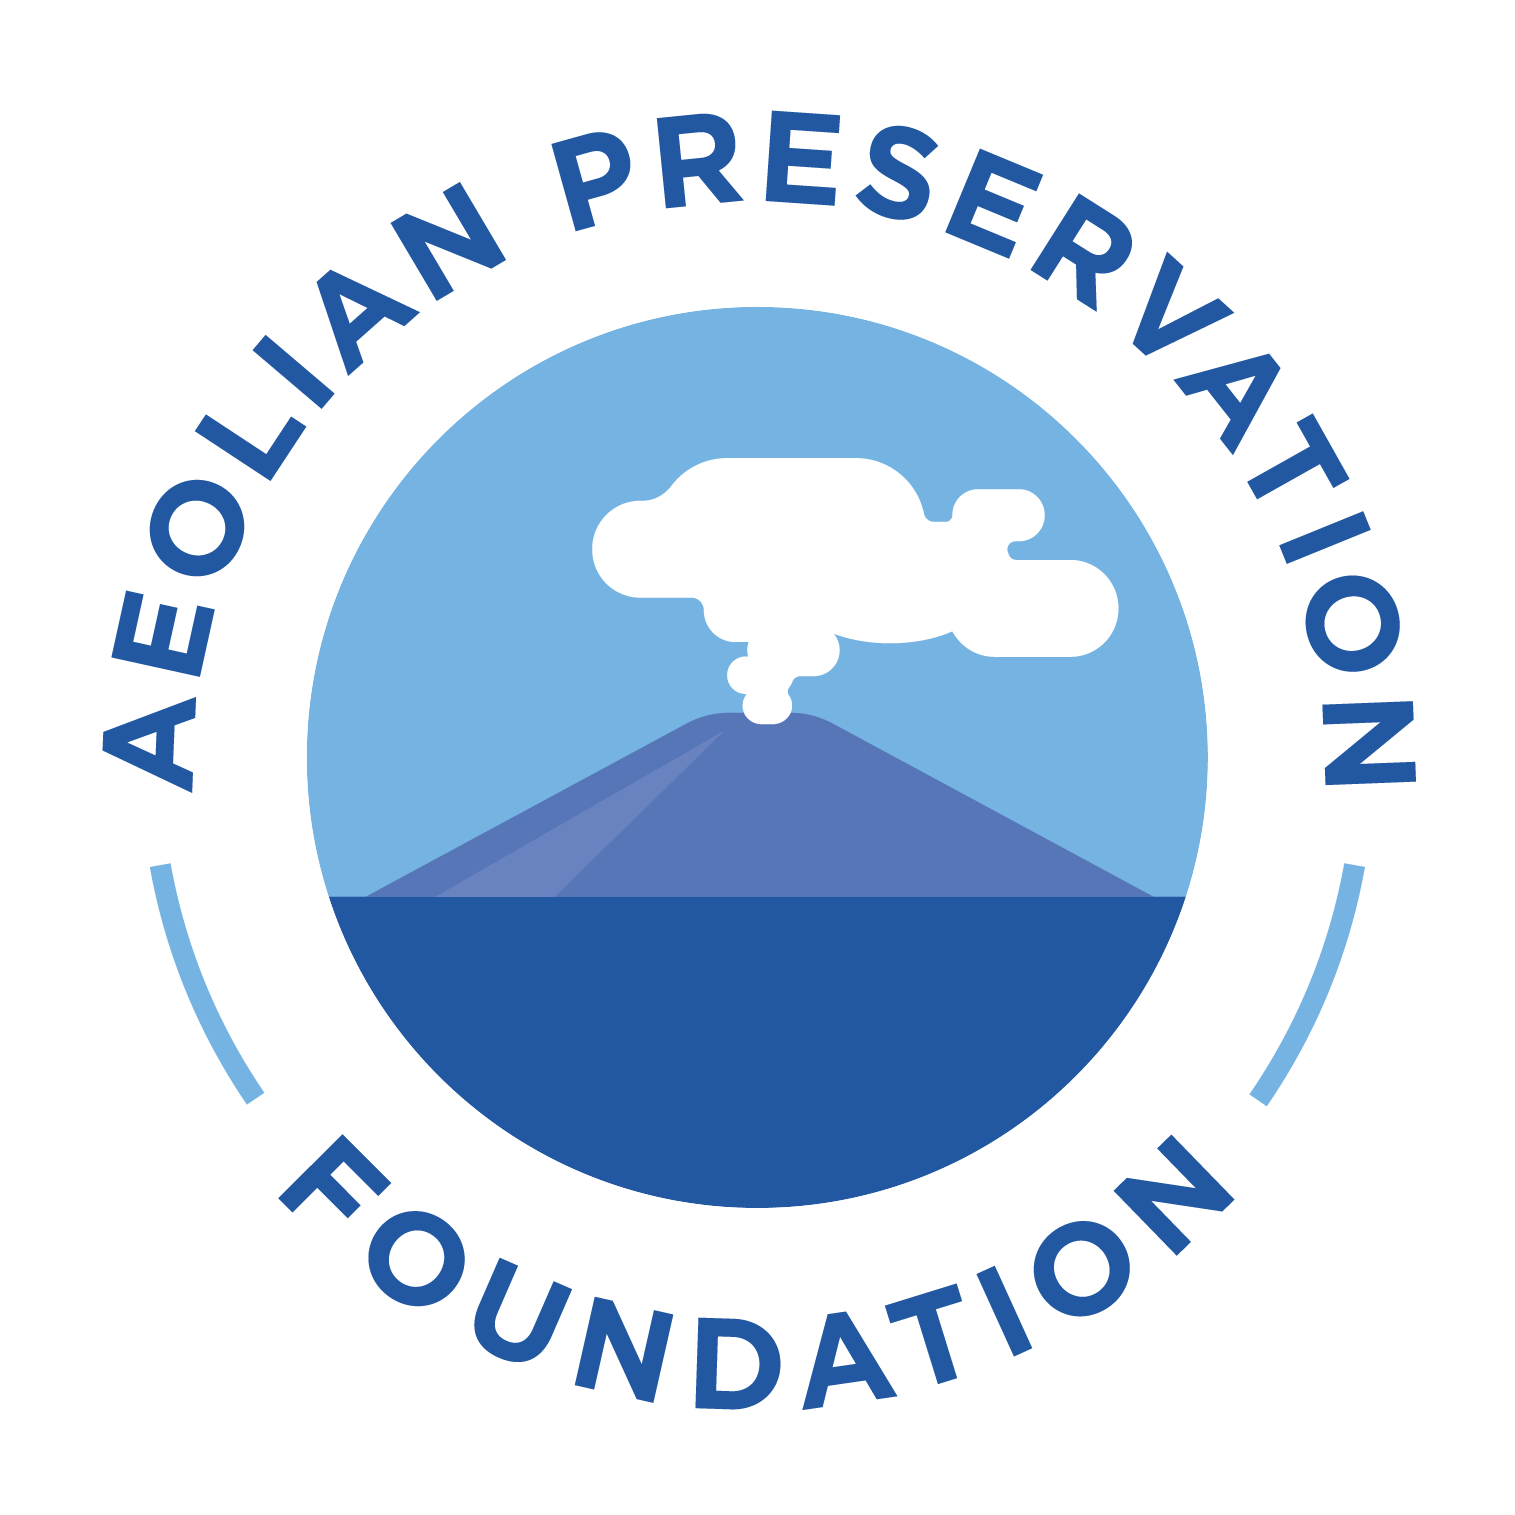 Aeolian Islands preservation fund